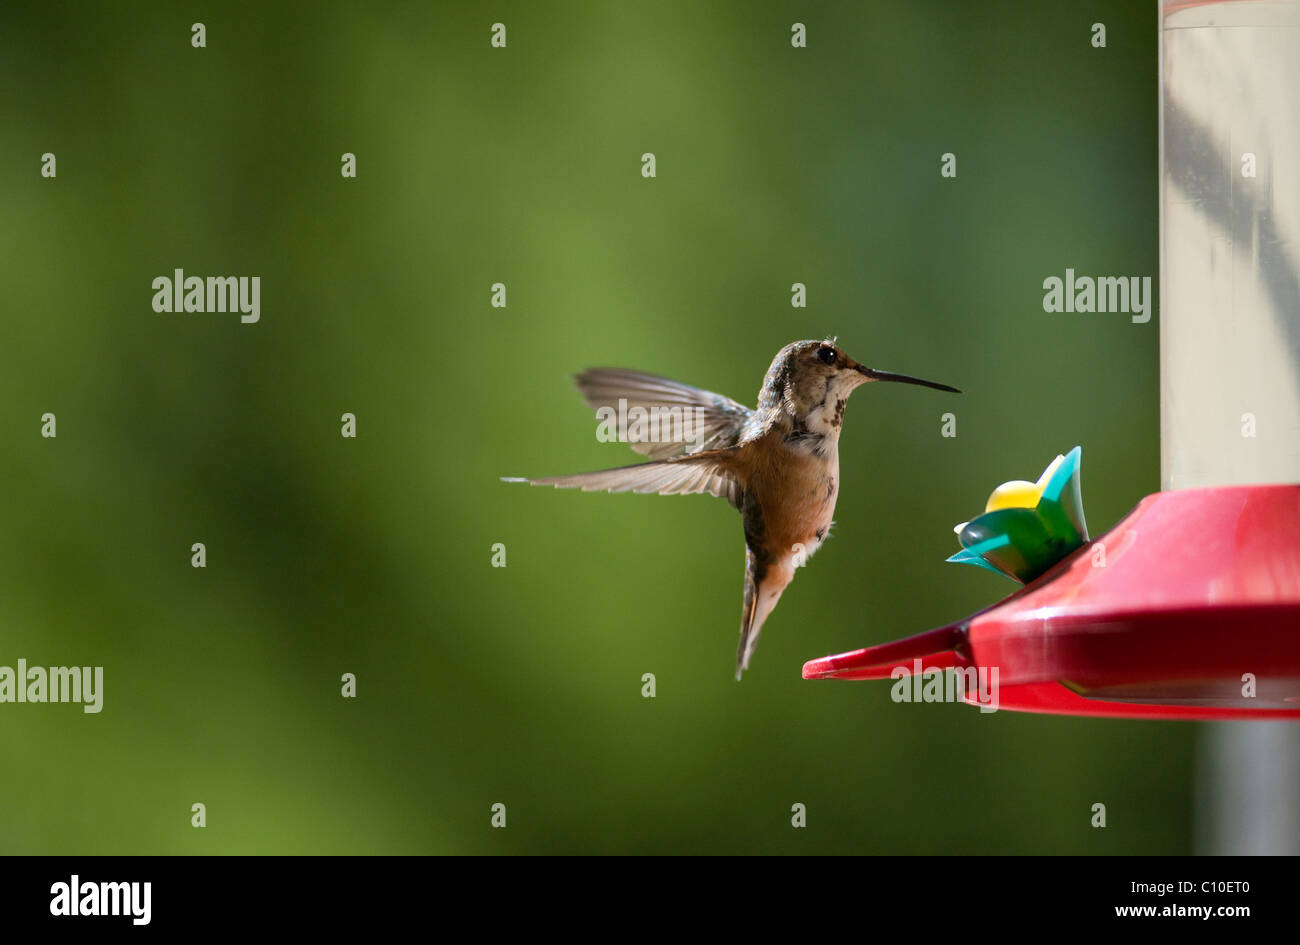 Hummingbird feeding with green background Stock Photo